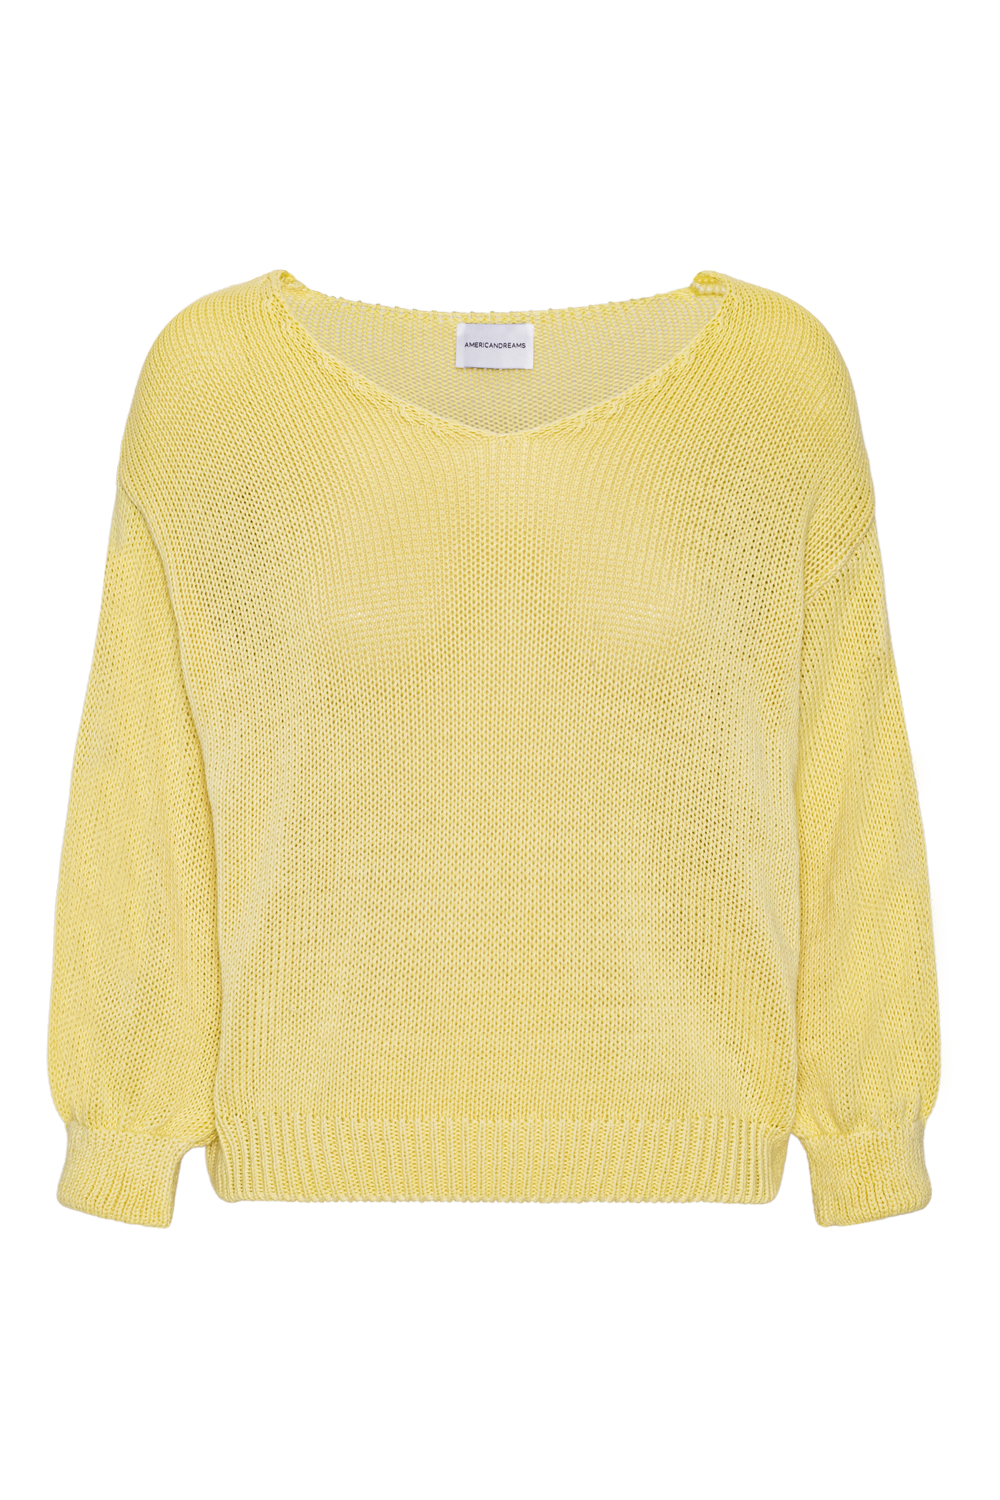 Milana LS Light Cotton Knit Yellow